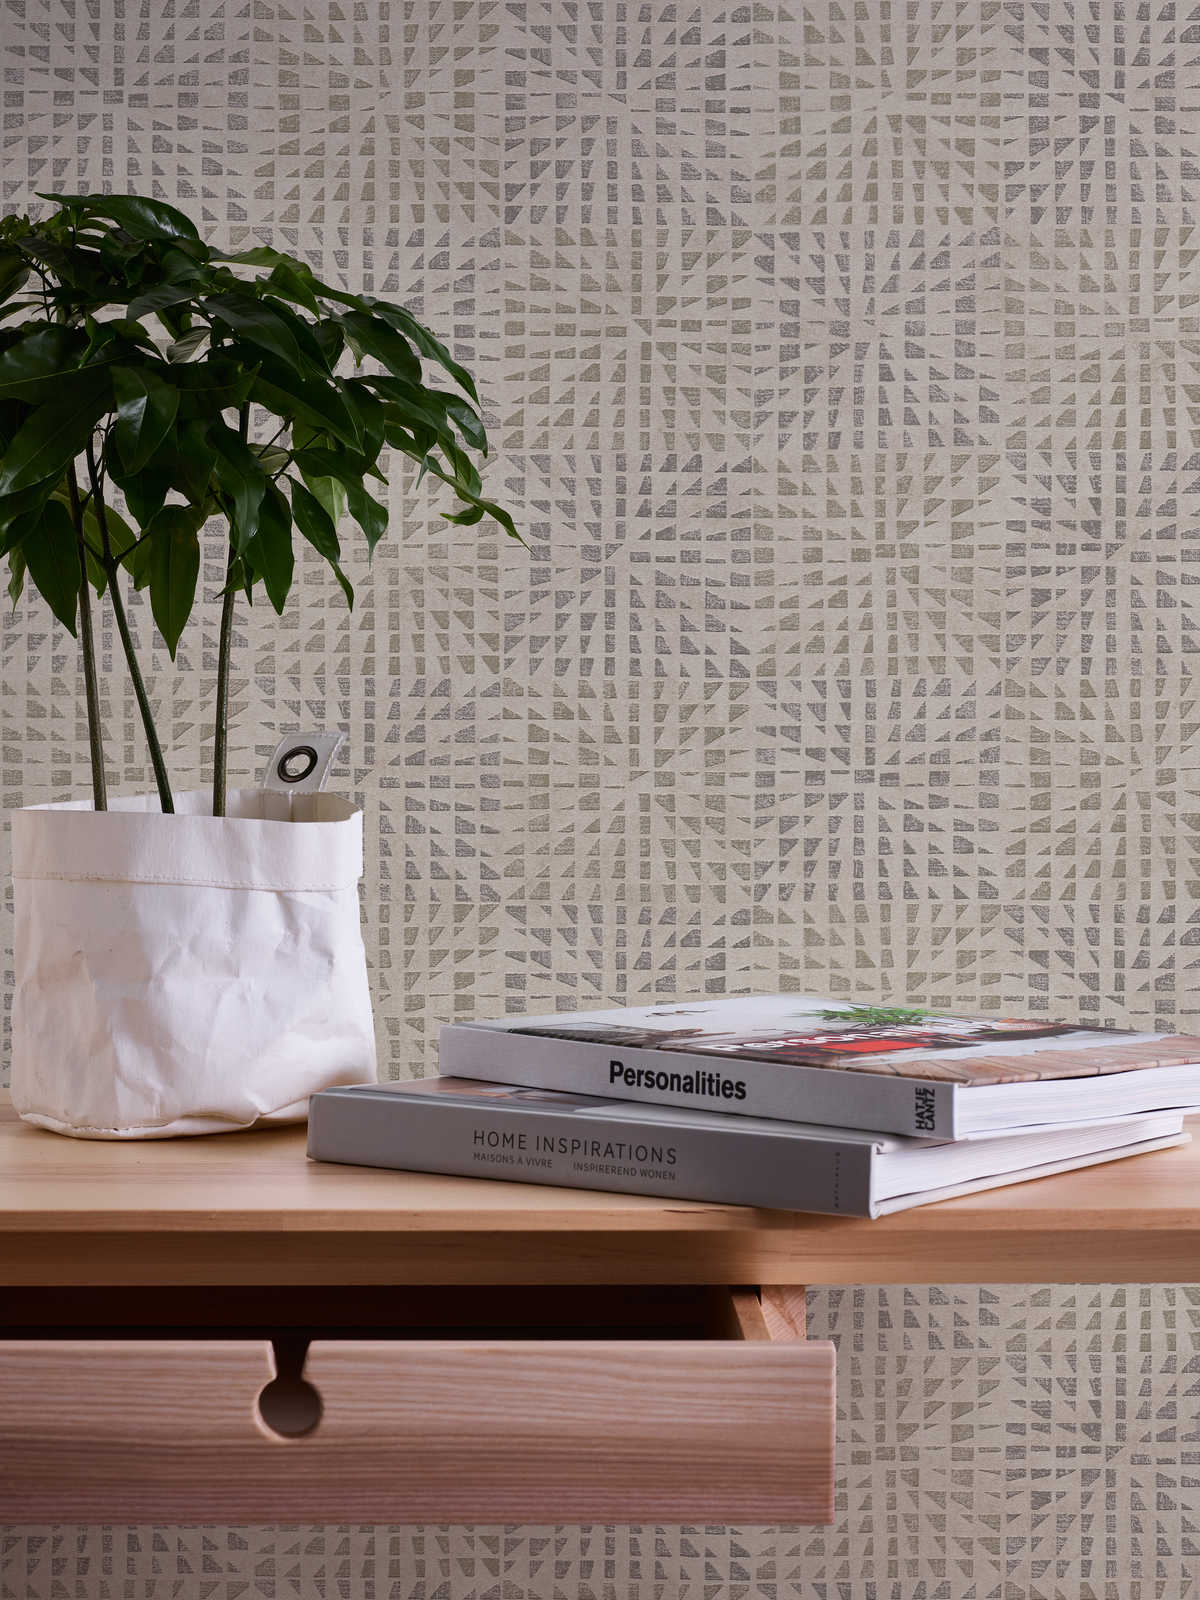             Ethno wallpaper with textured pattern & mosaic effect - grey, beige
        